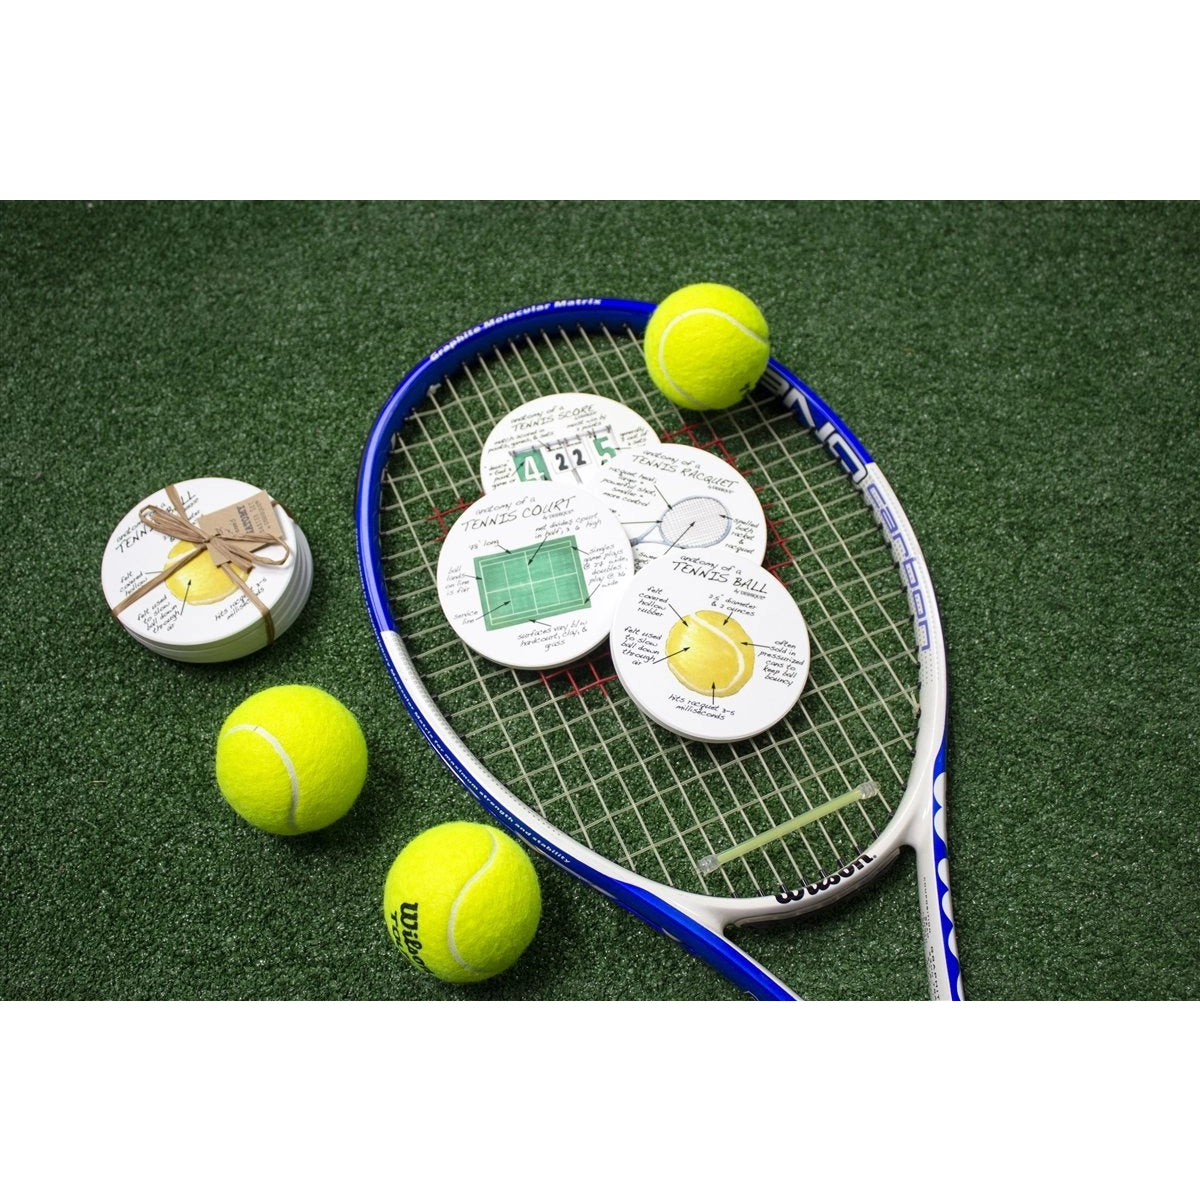 Tennis Anatomy Coasters